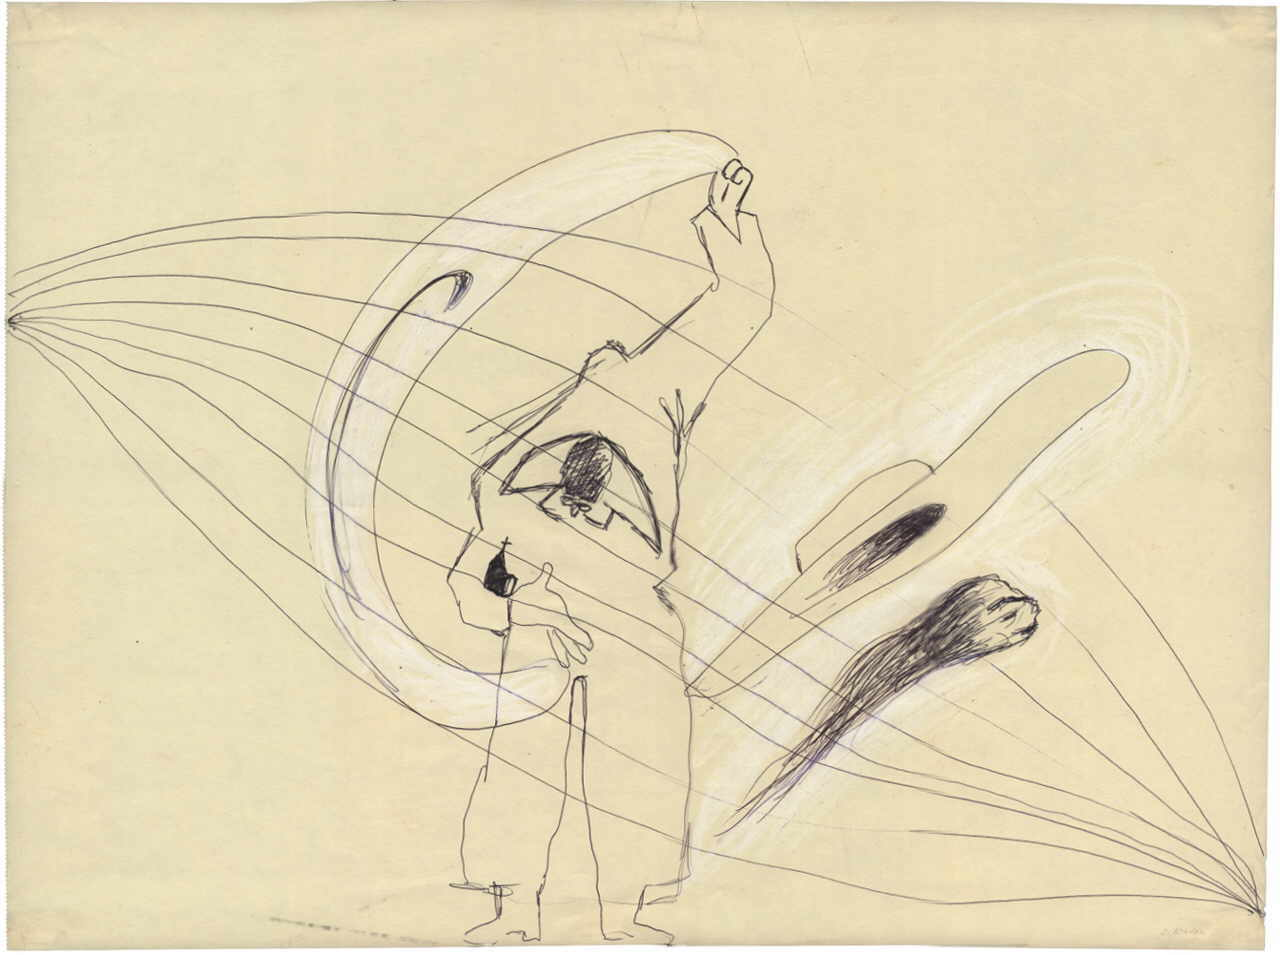 Kaden Siegfried 
untitled, 1985
ball-point pen, pastel / paper
42 x 56 cm